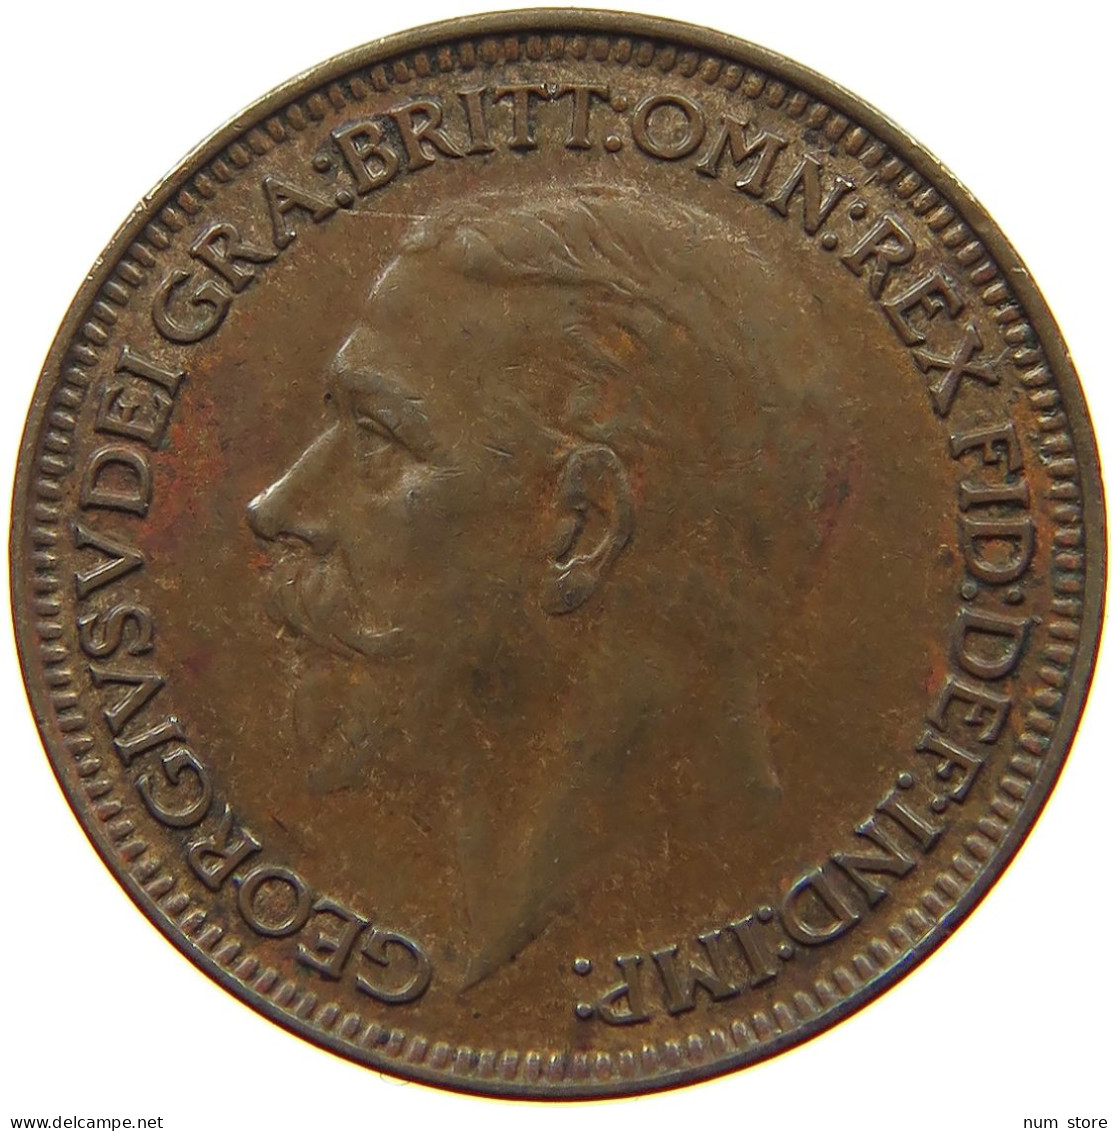 GREAT BRITAIN FARTHING 1928 George V. (1910-1936) #a093 0493 - B. 1 Farthing